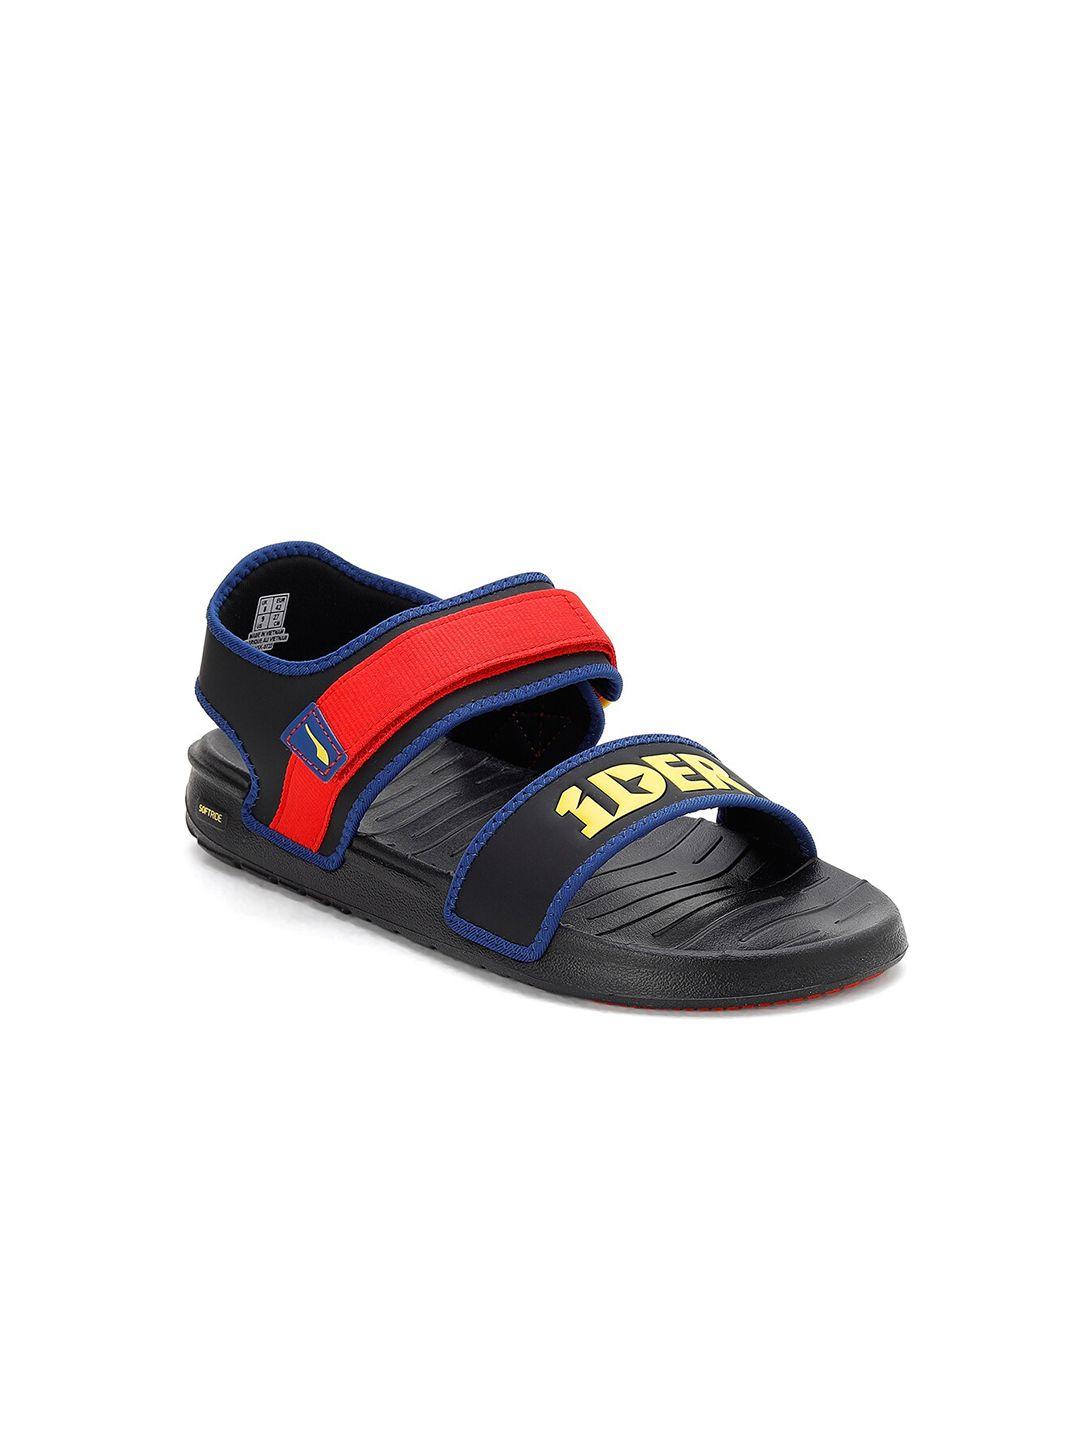 puma-men-black-&-blue-puma-x-1der-softride-comfort-sandals